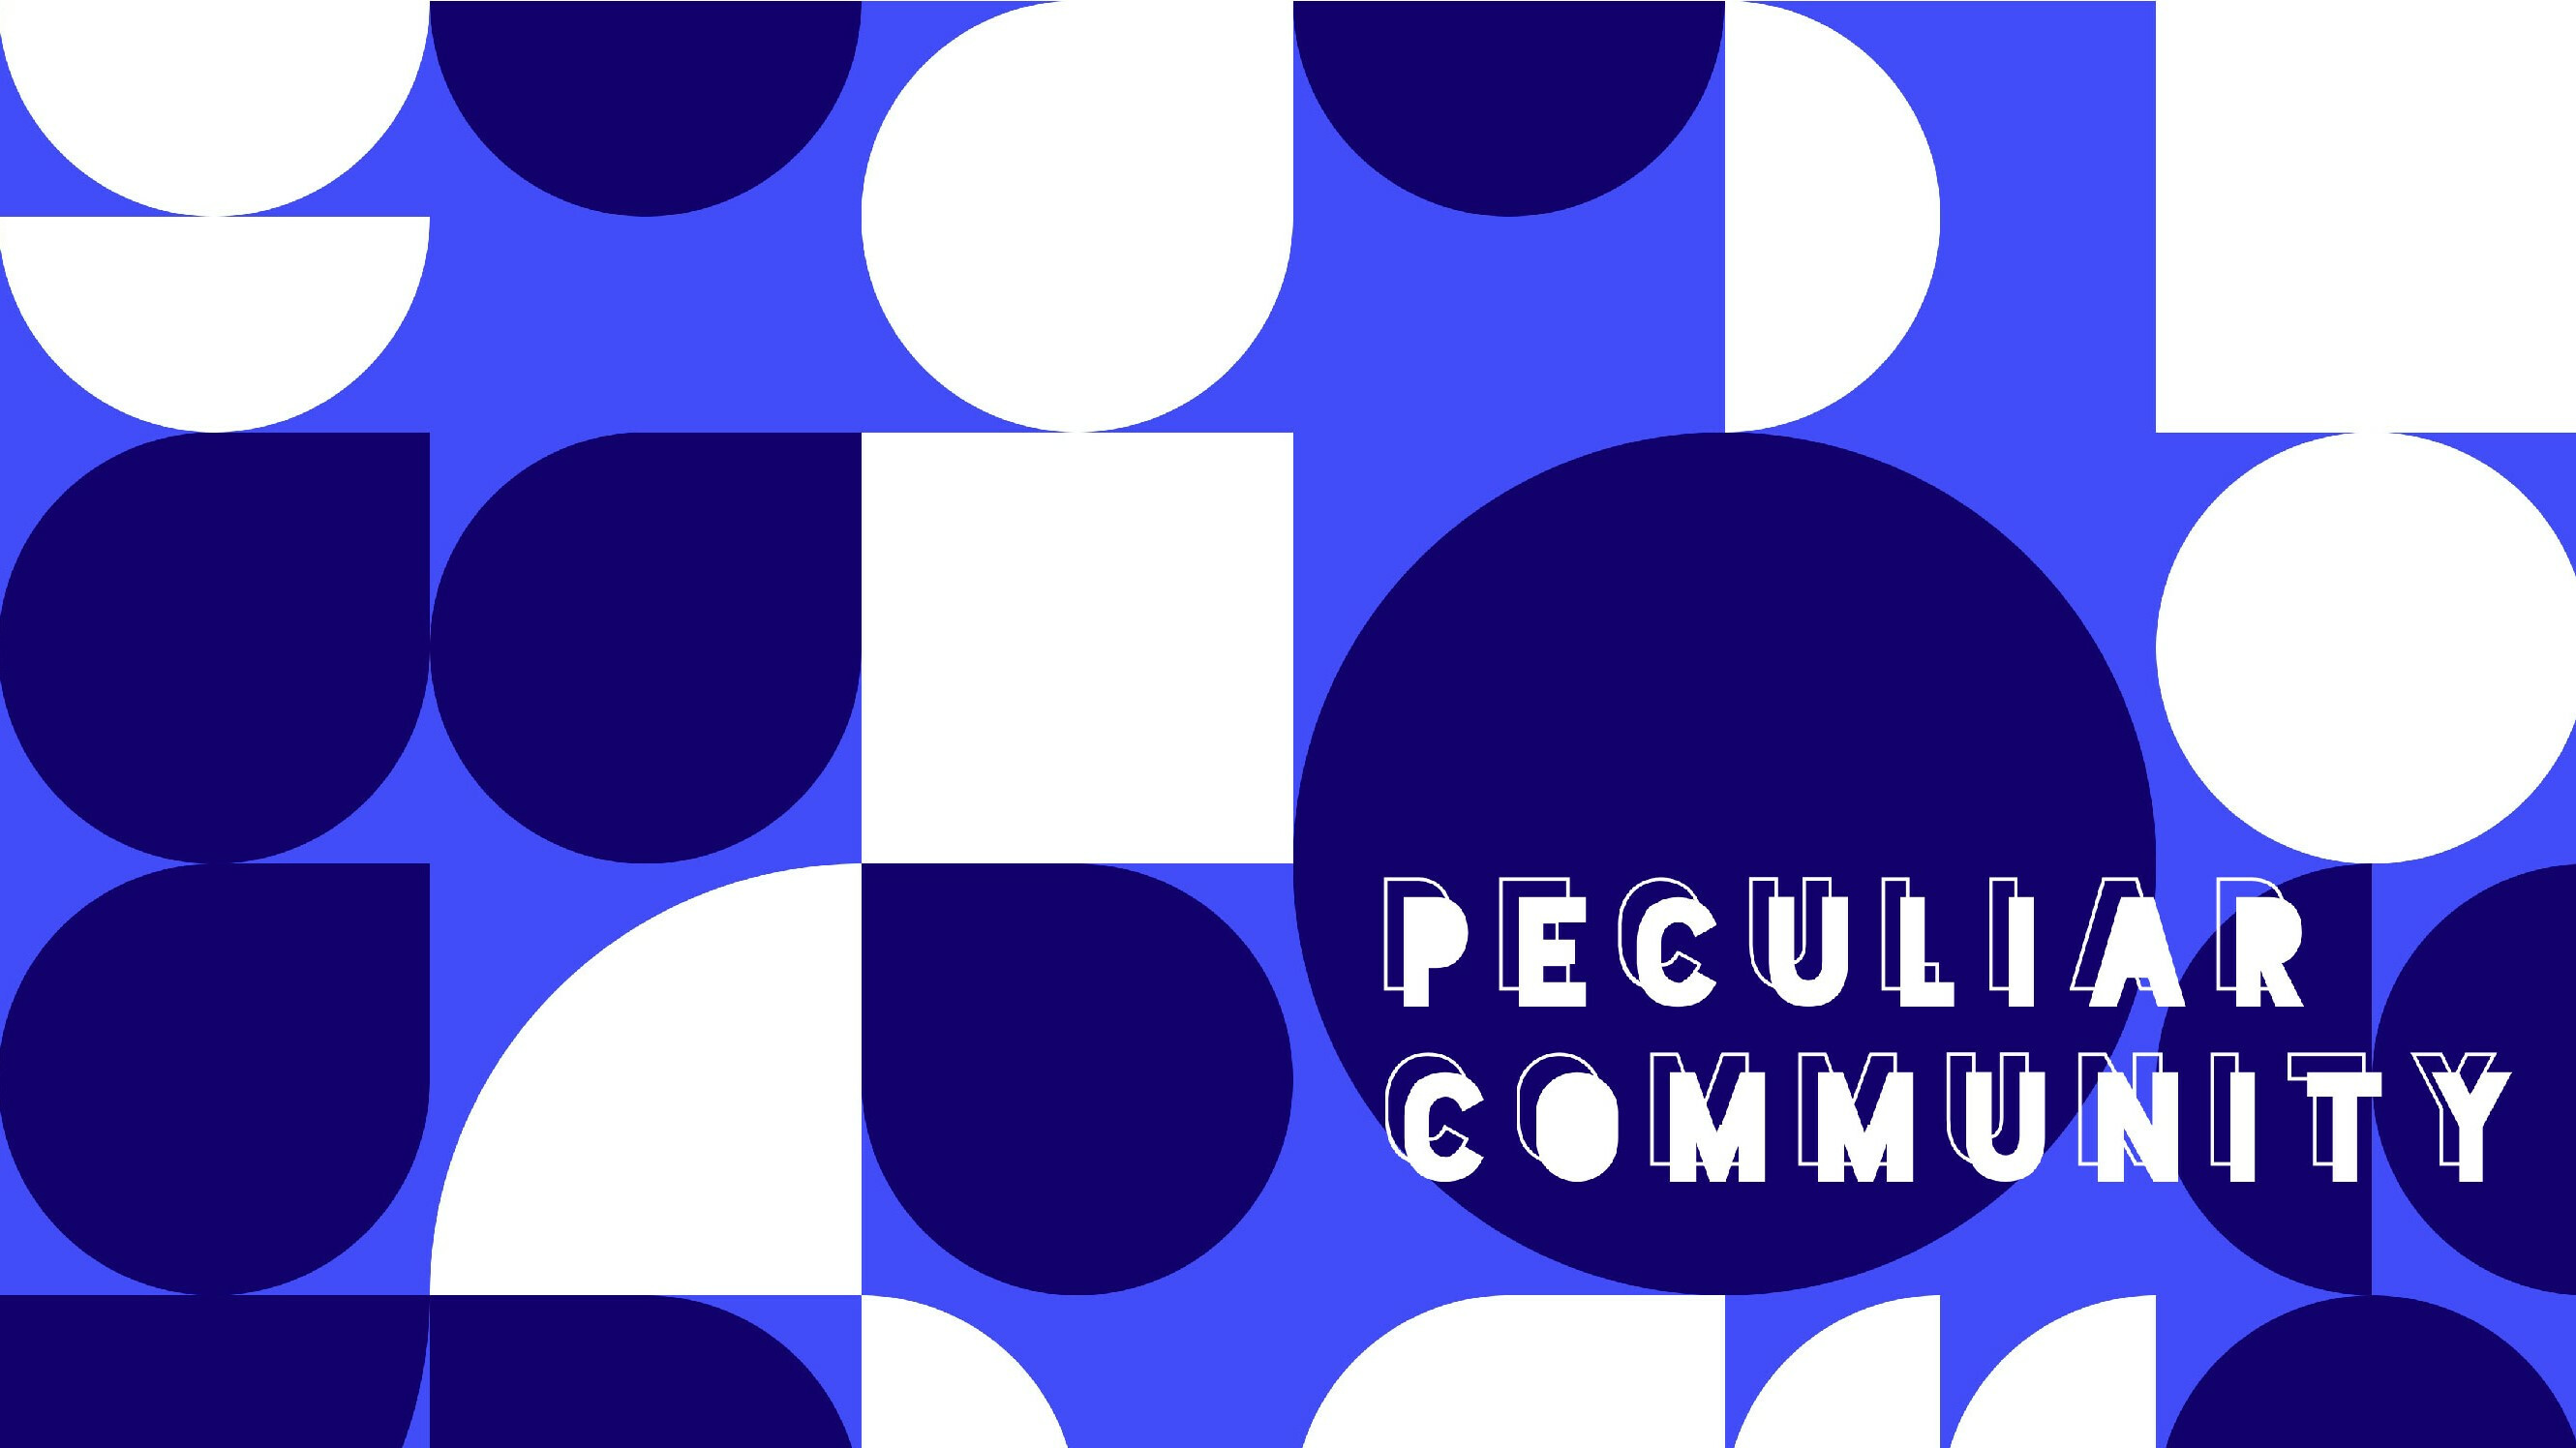 Peculiar Community - Dignity